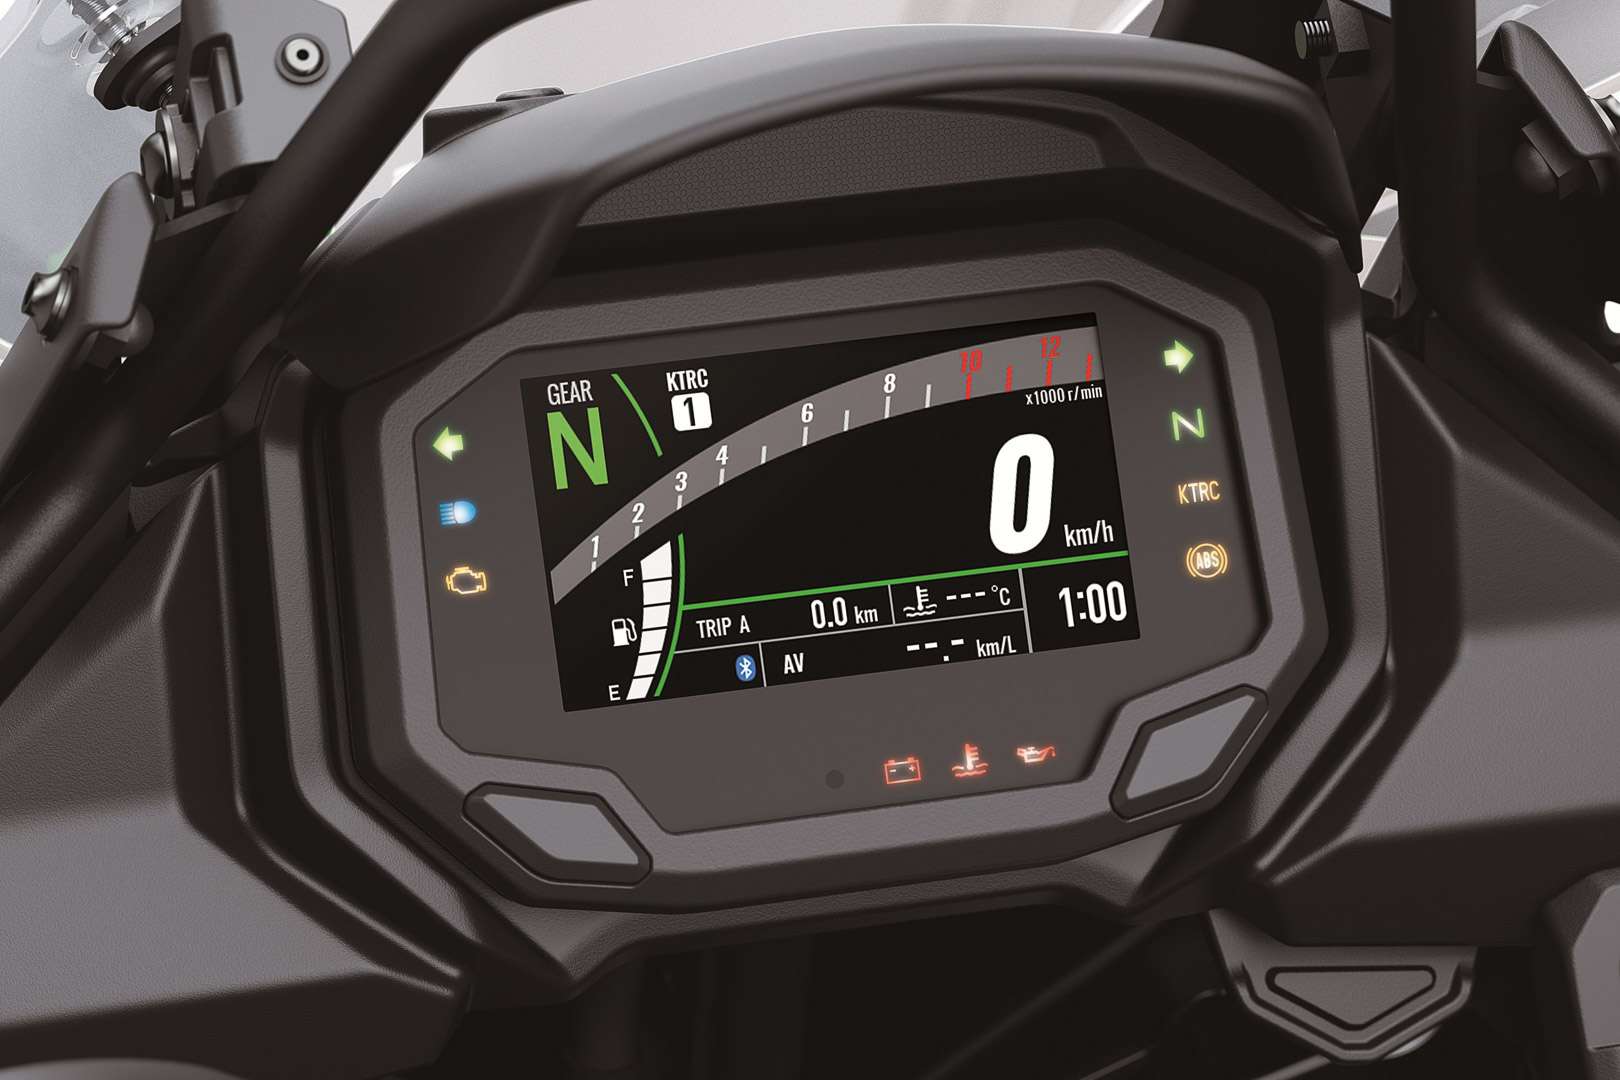 2022-kawasaki-versys-650-first-look-adventure-sport-motorcycle-9